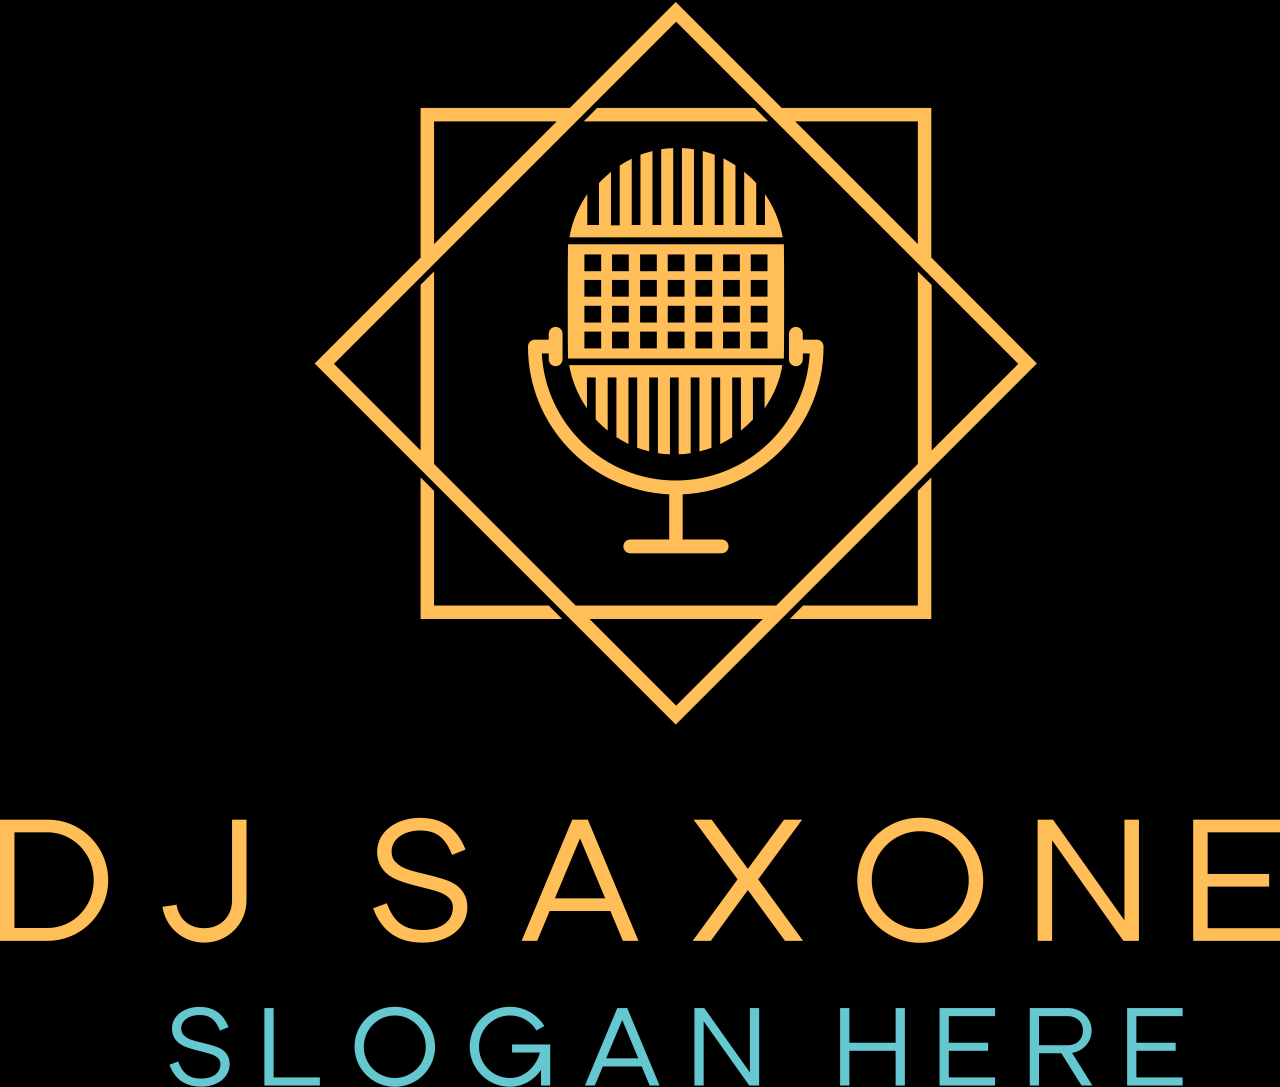 Dj Saxone 's logo